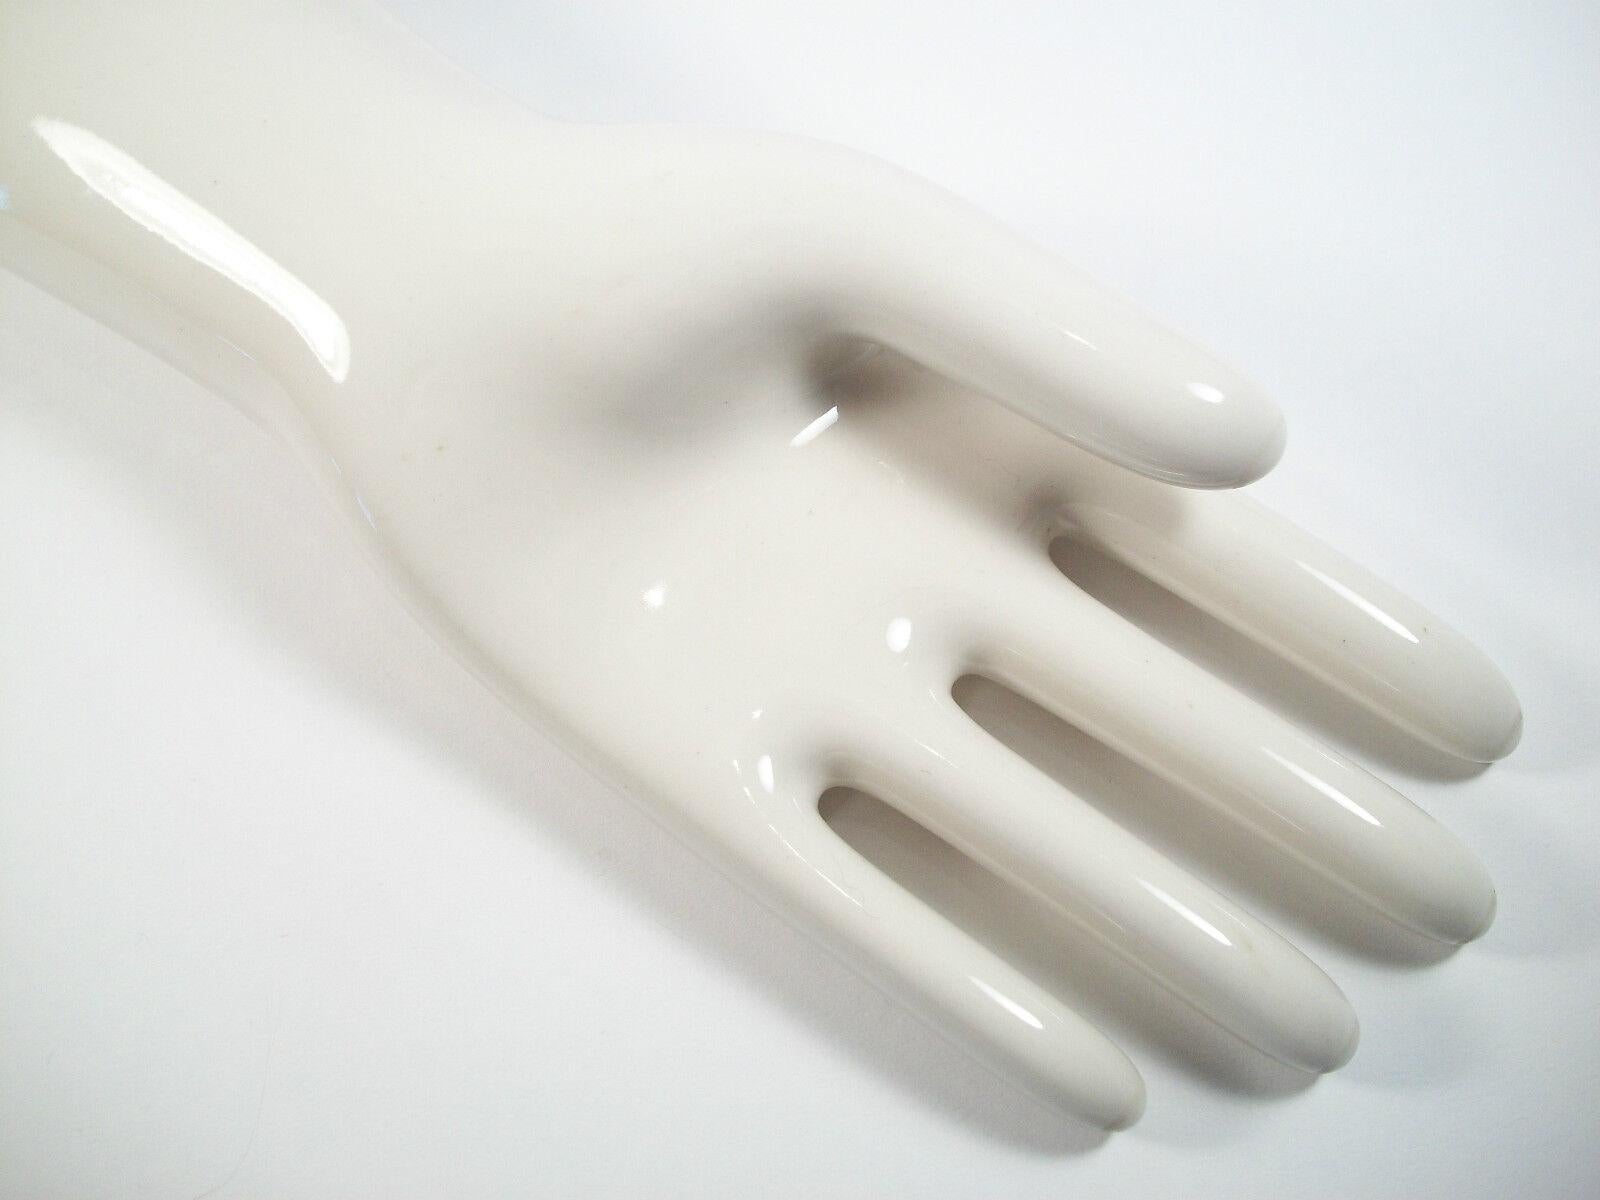 Antique Ceramic Industrial Glove Mold - U.S. - Late 19th Century For Sale 3